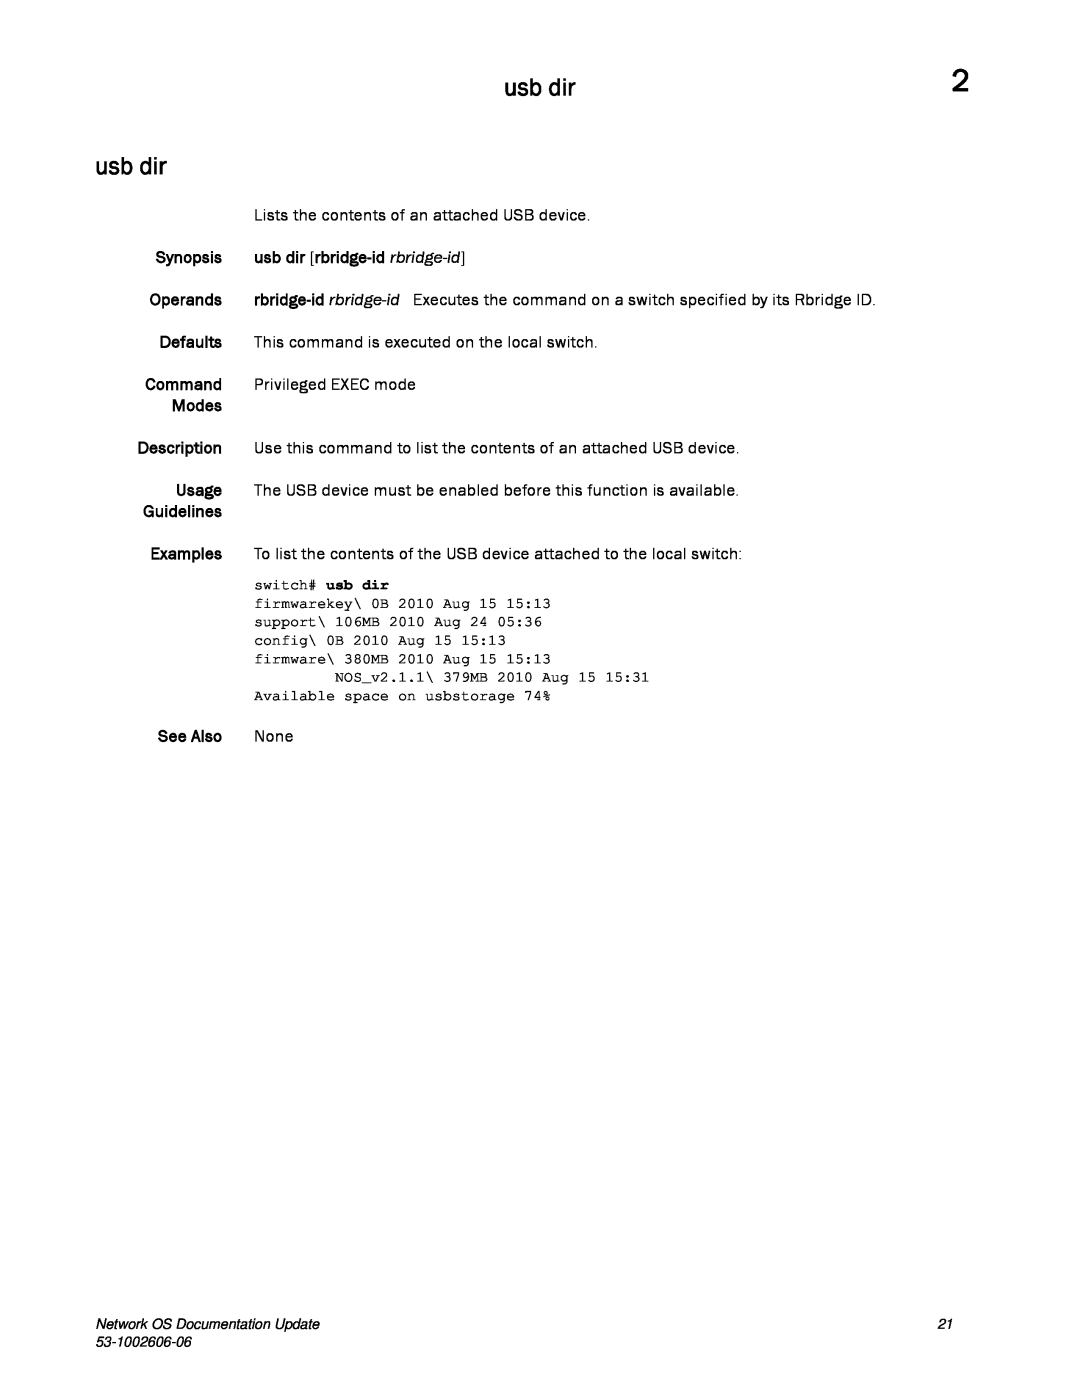 Brocade Communications Systems 2.1 manual switch# usb dir, firmwarekey\ 0B 2010 Aug 15, support\ 106MB 2010 Aug 